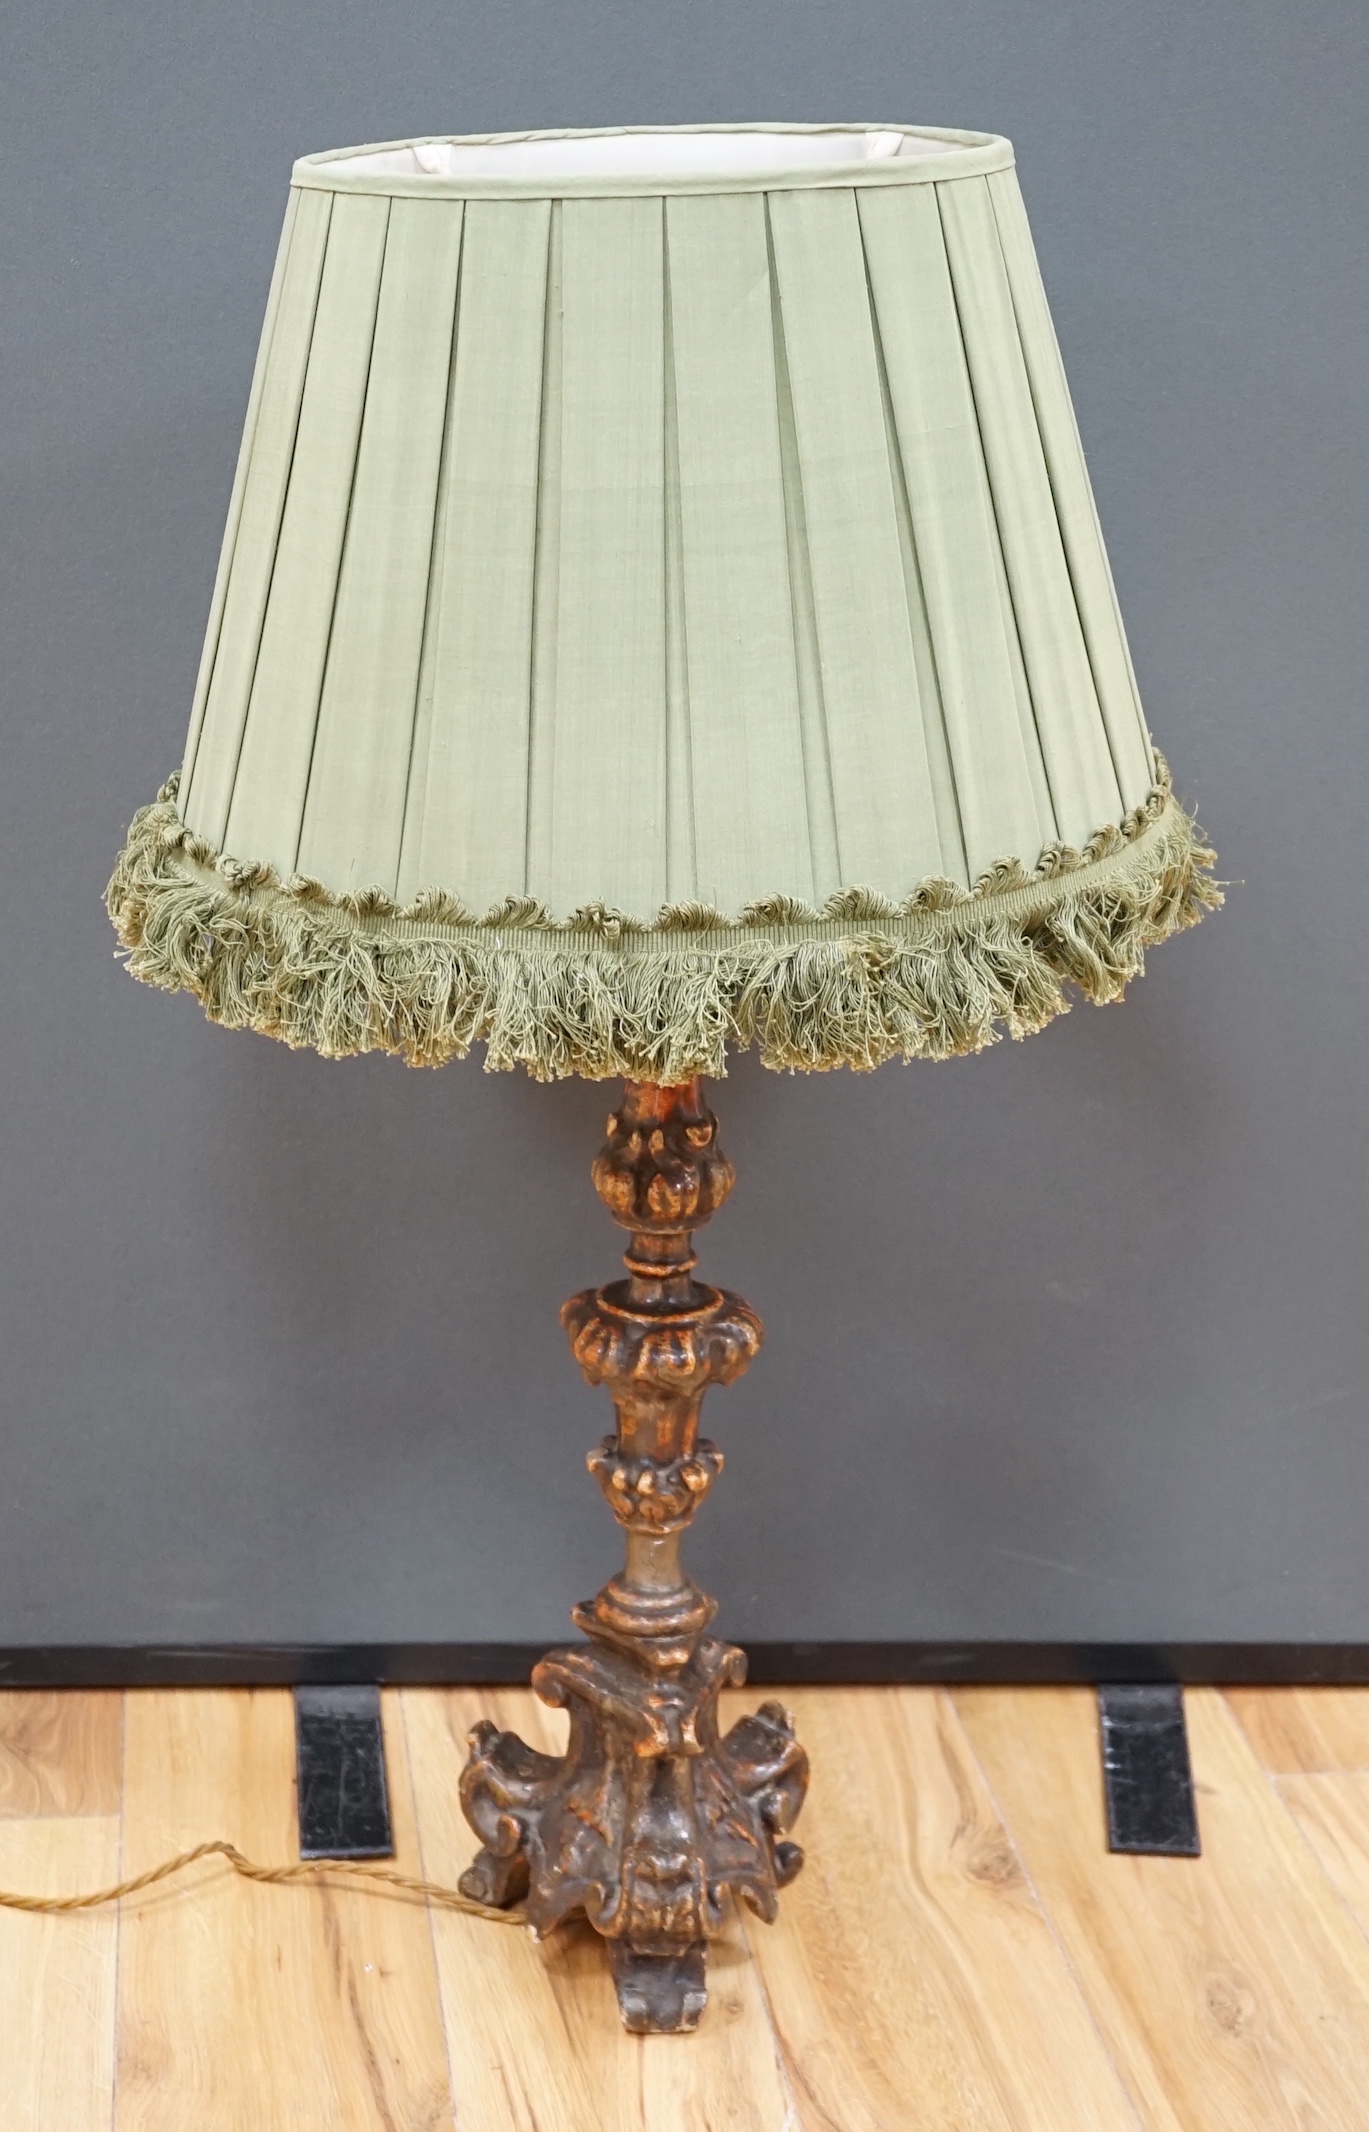 An Italian column lamp with green fabric shade, 88cm high including the shade